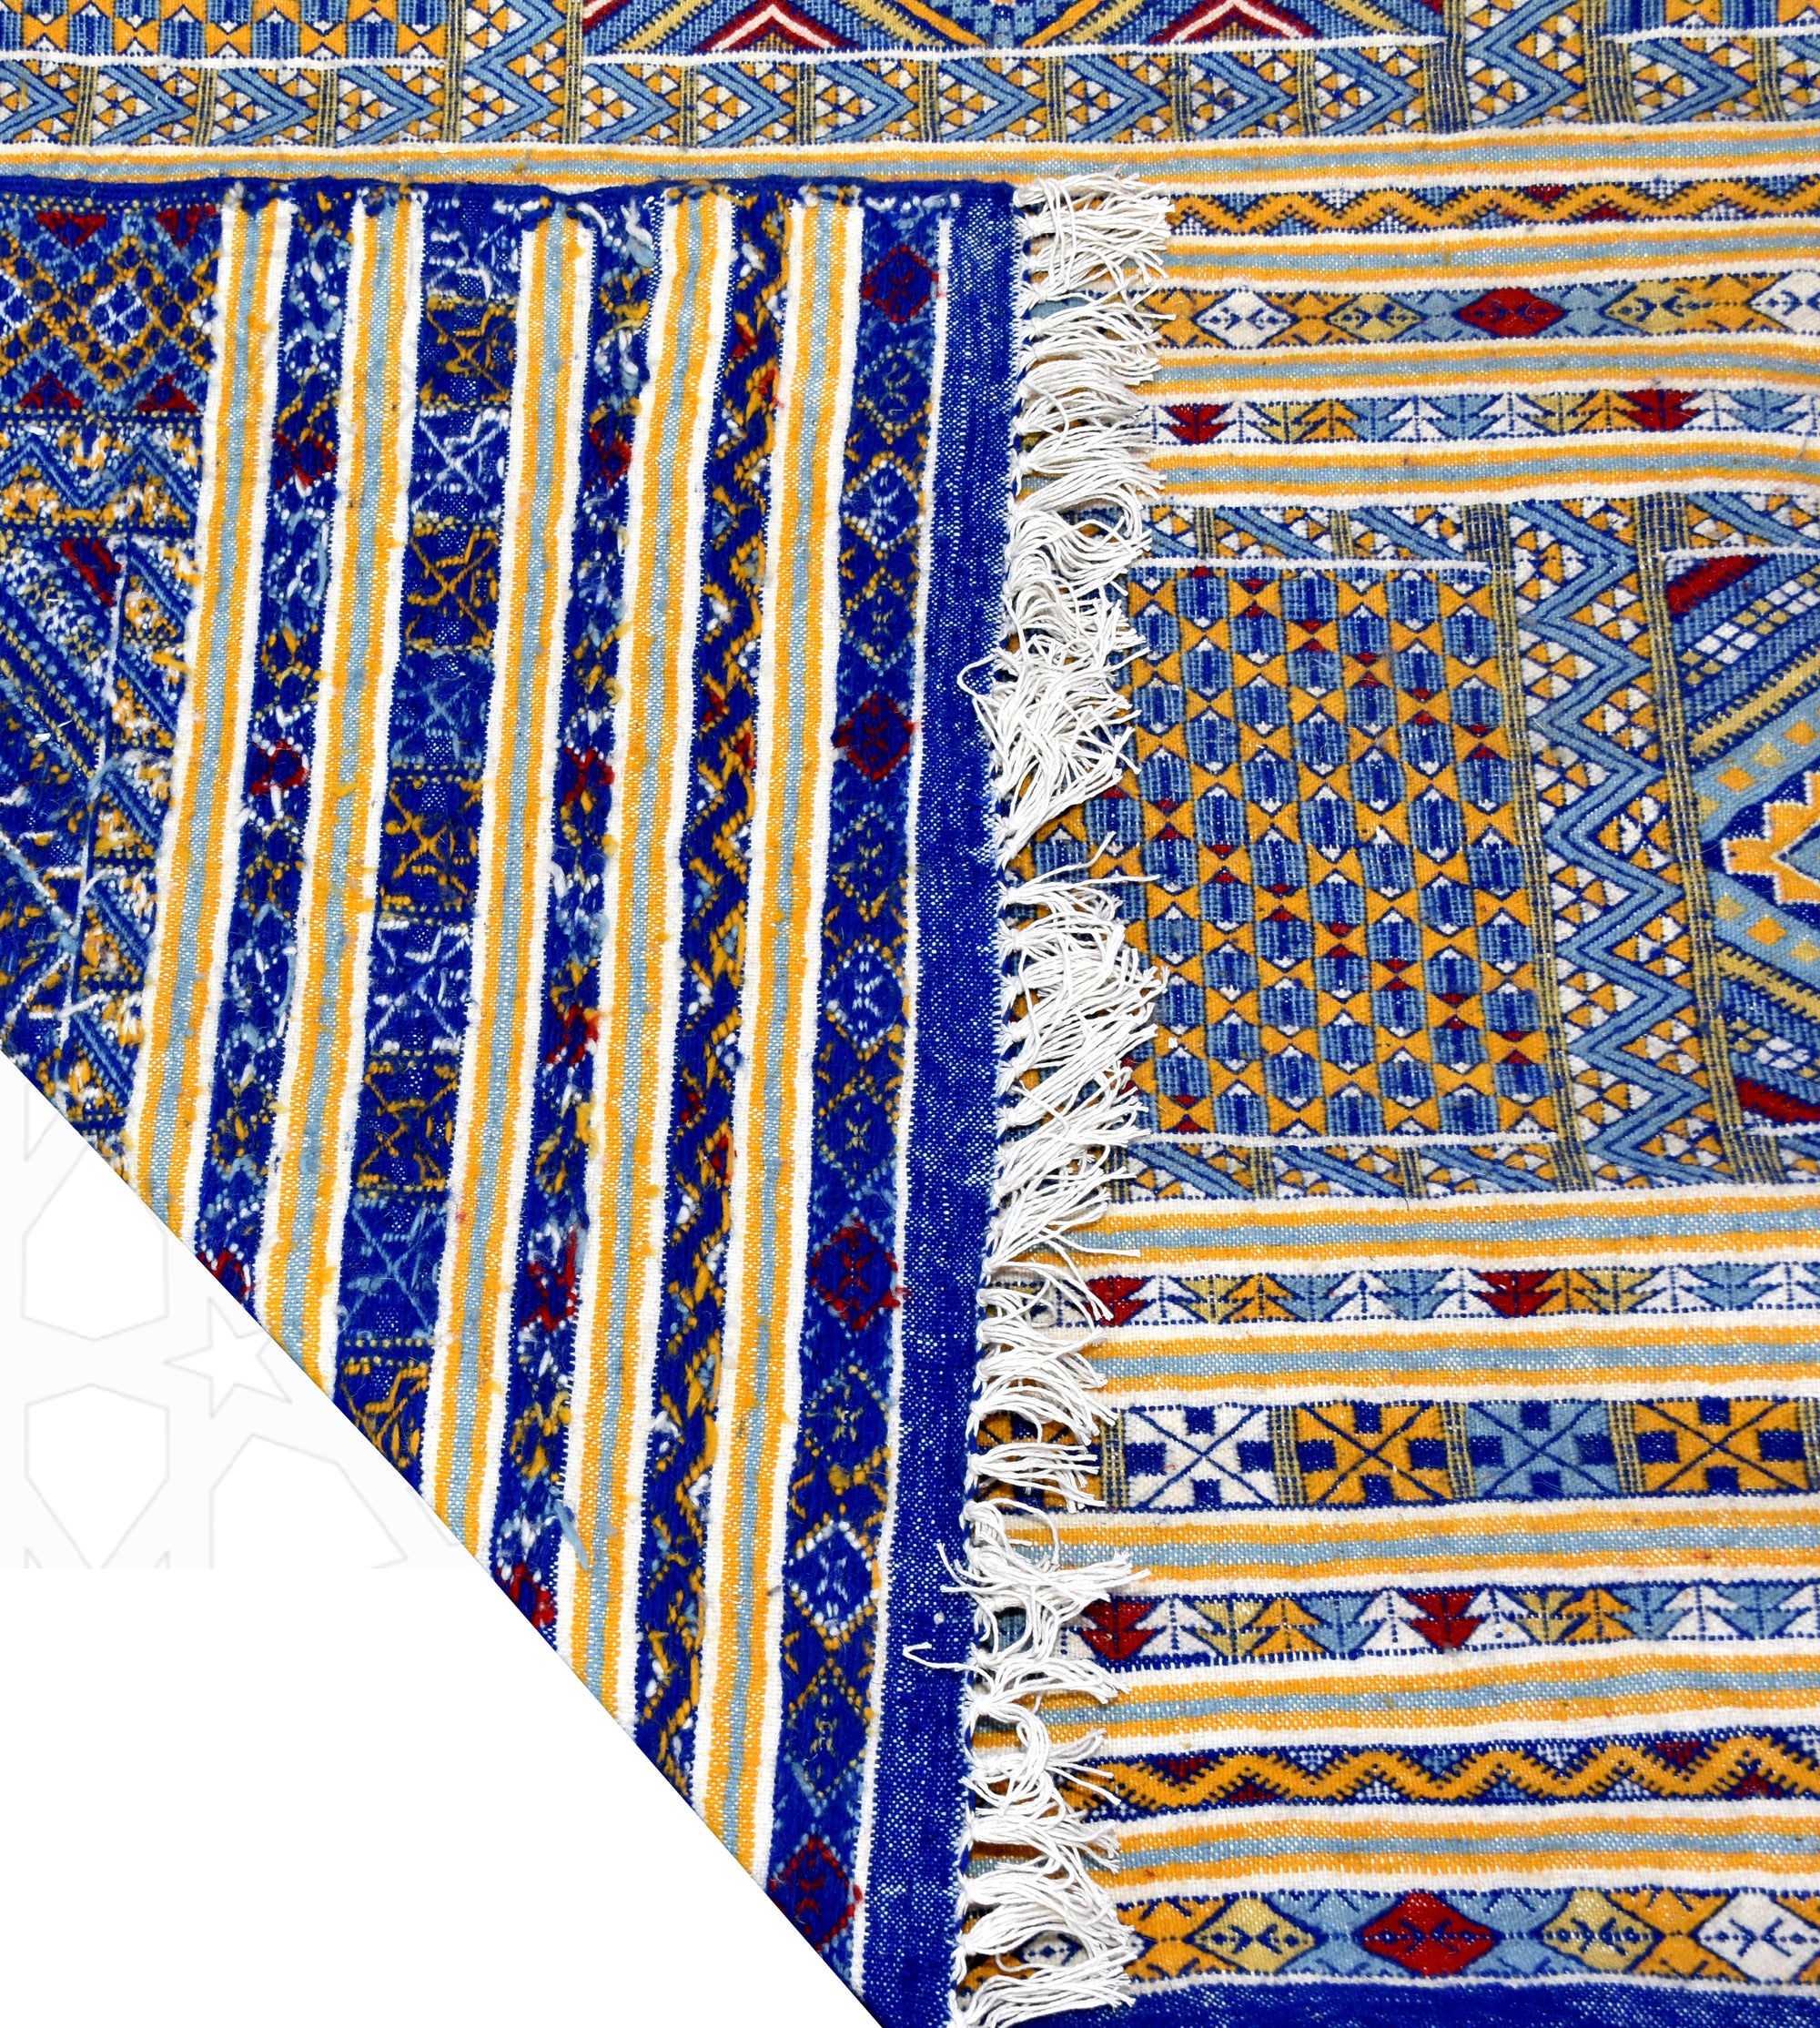 Flatweave kilim hanbal Blue Moroccan rug - 5.91 x 7.55 ft / 180 x 230 cm